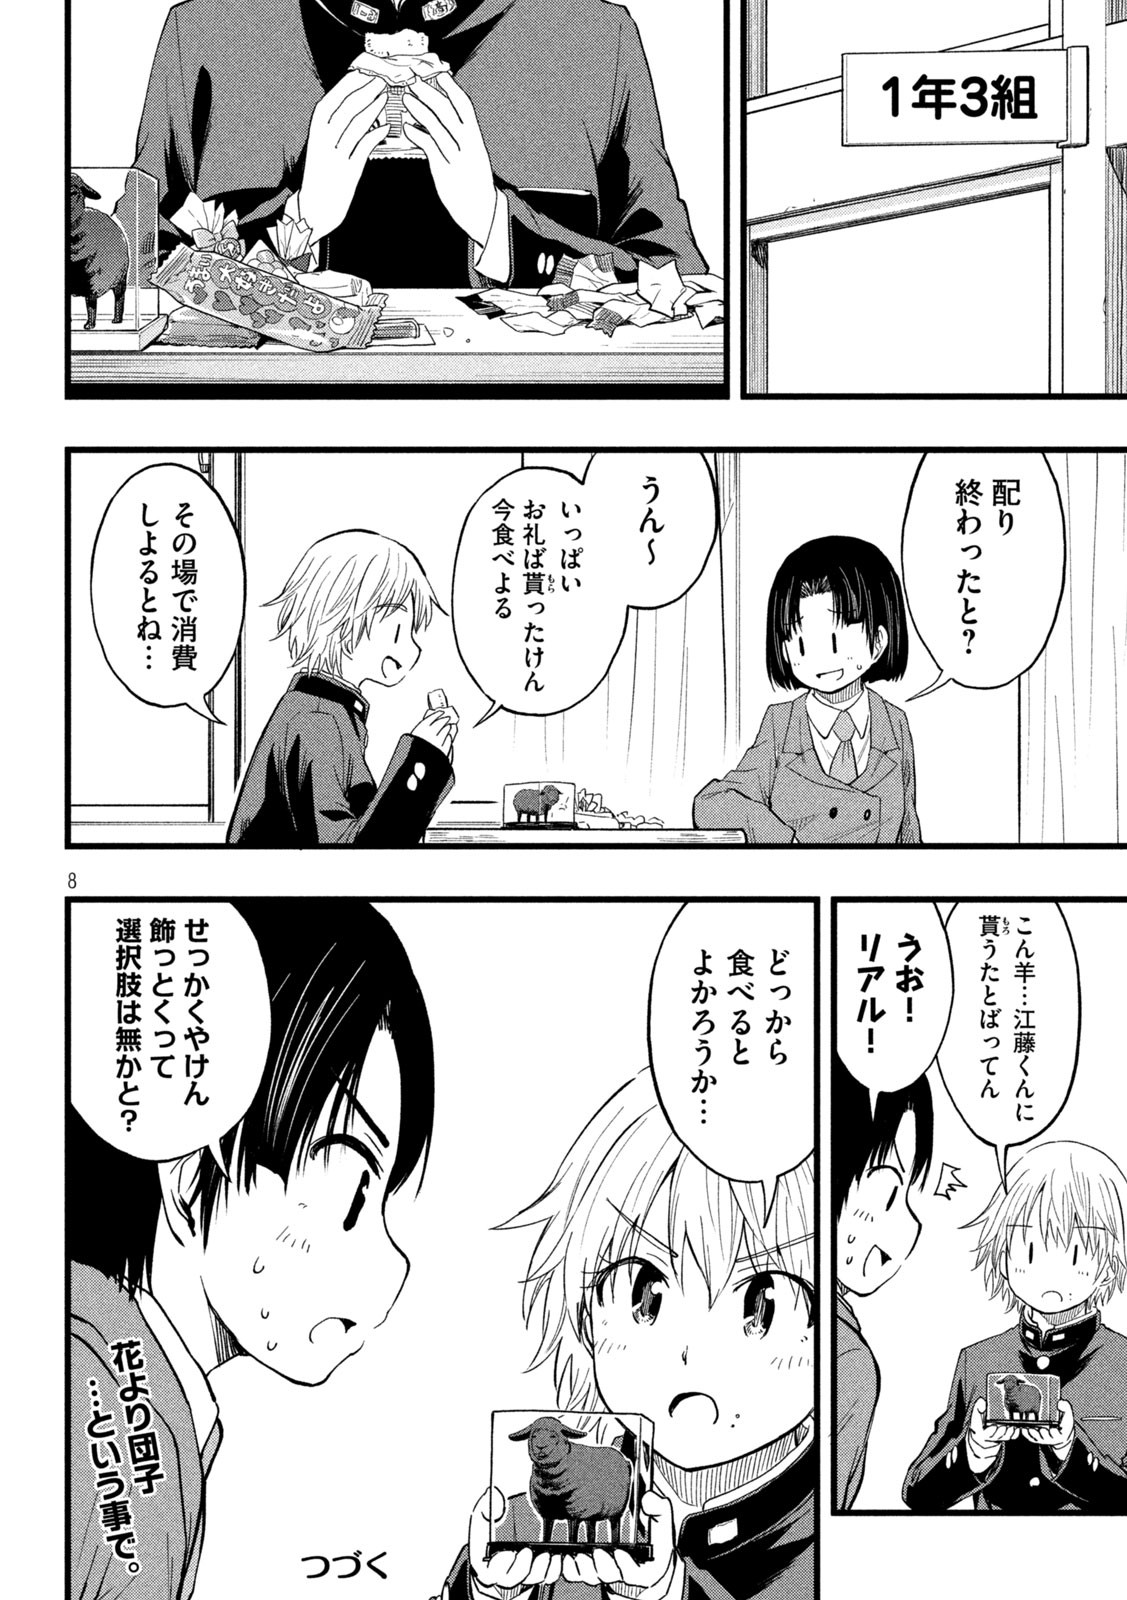 Koharu haru! - Chapter 88 - Page 4